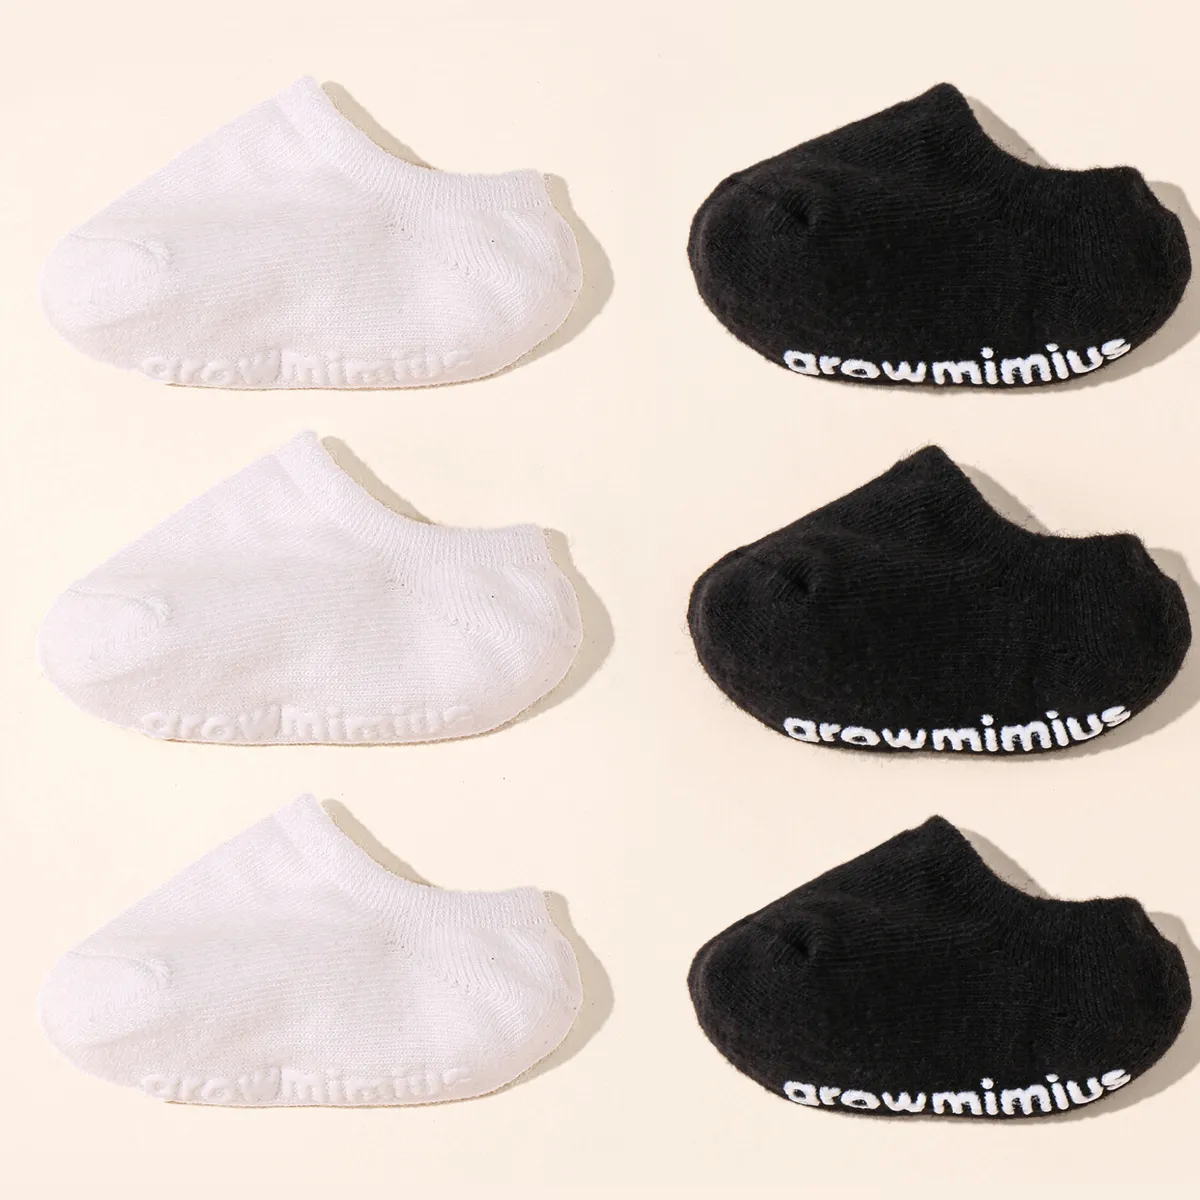 6-pairs Baby Pure Color Non-slip Grip Socks Black/White big image 1